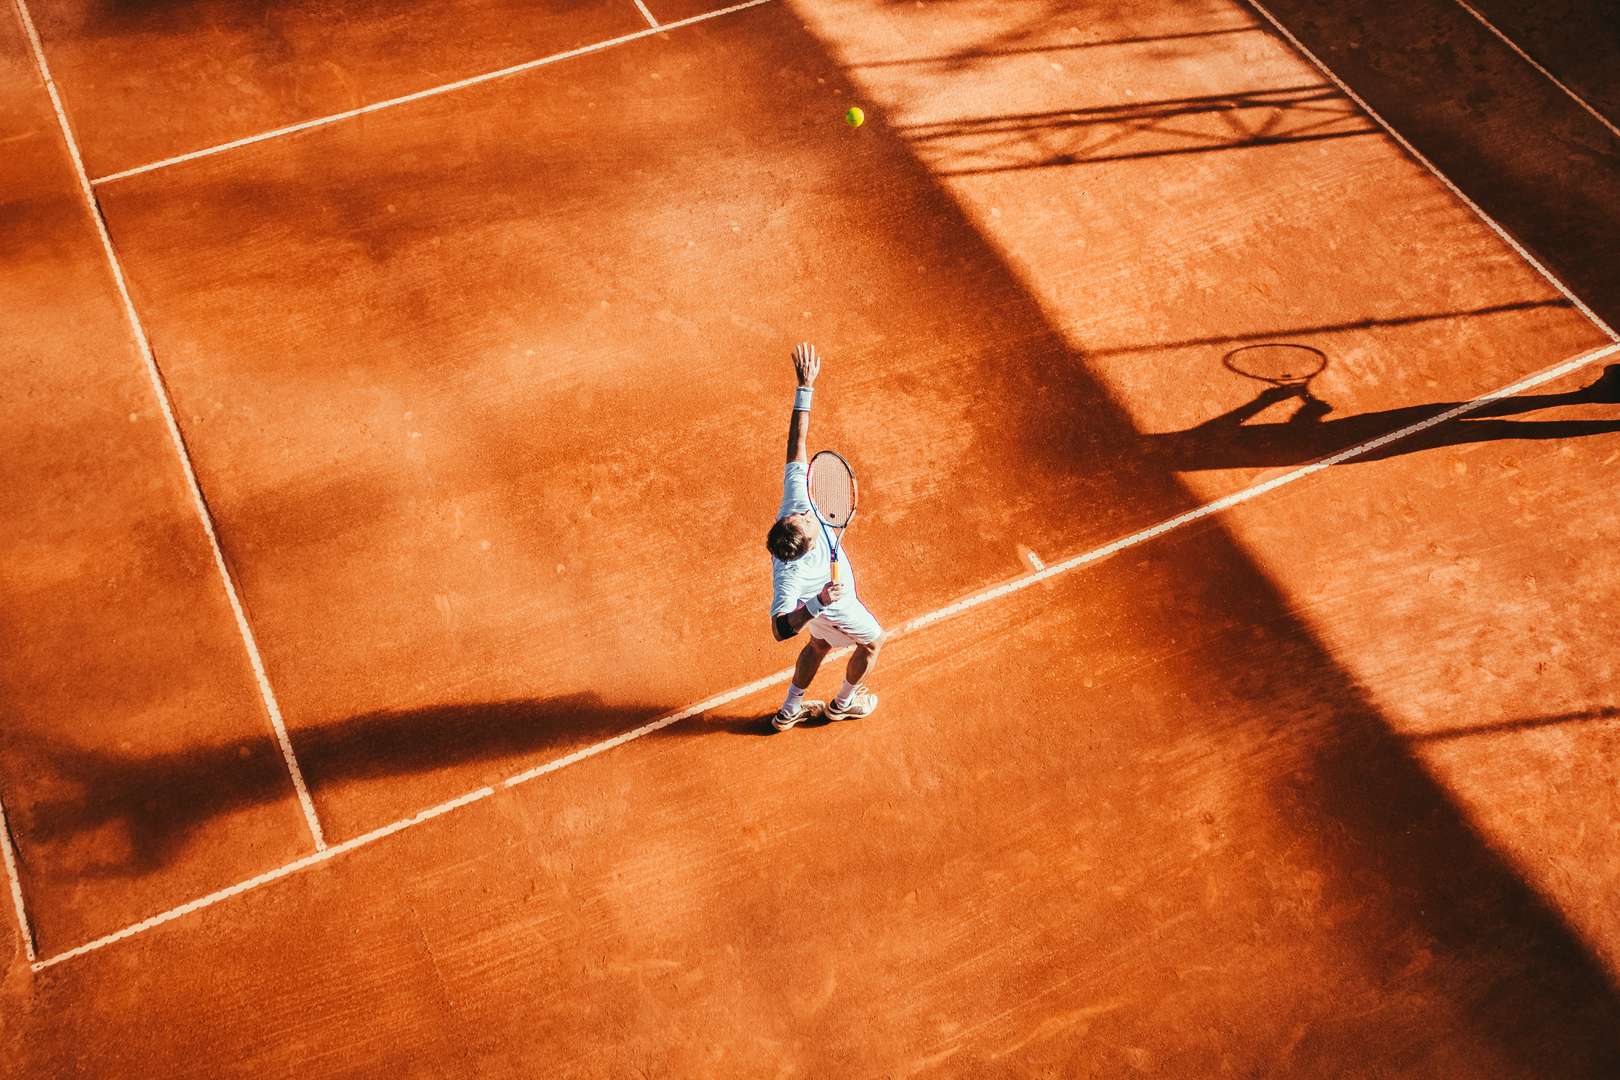 tennisspeler die bal opslaat